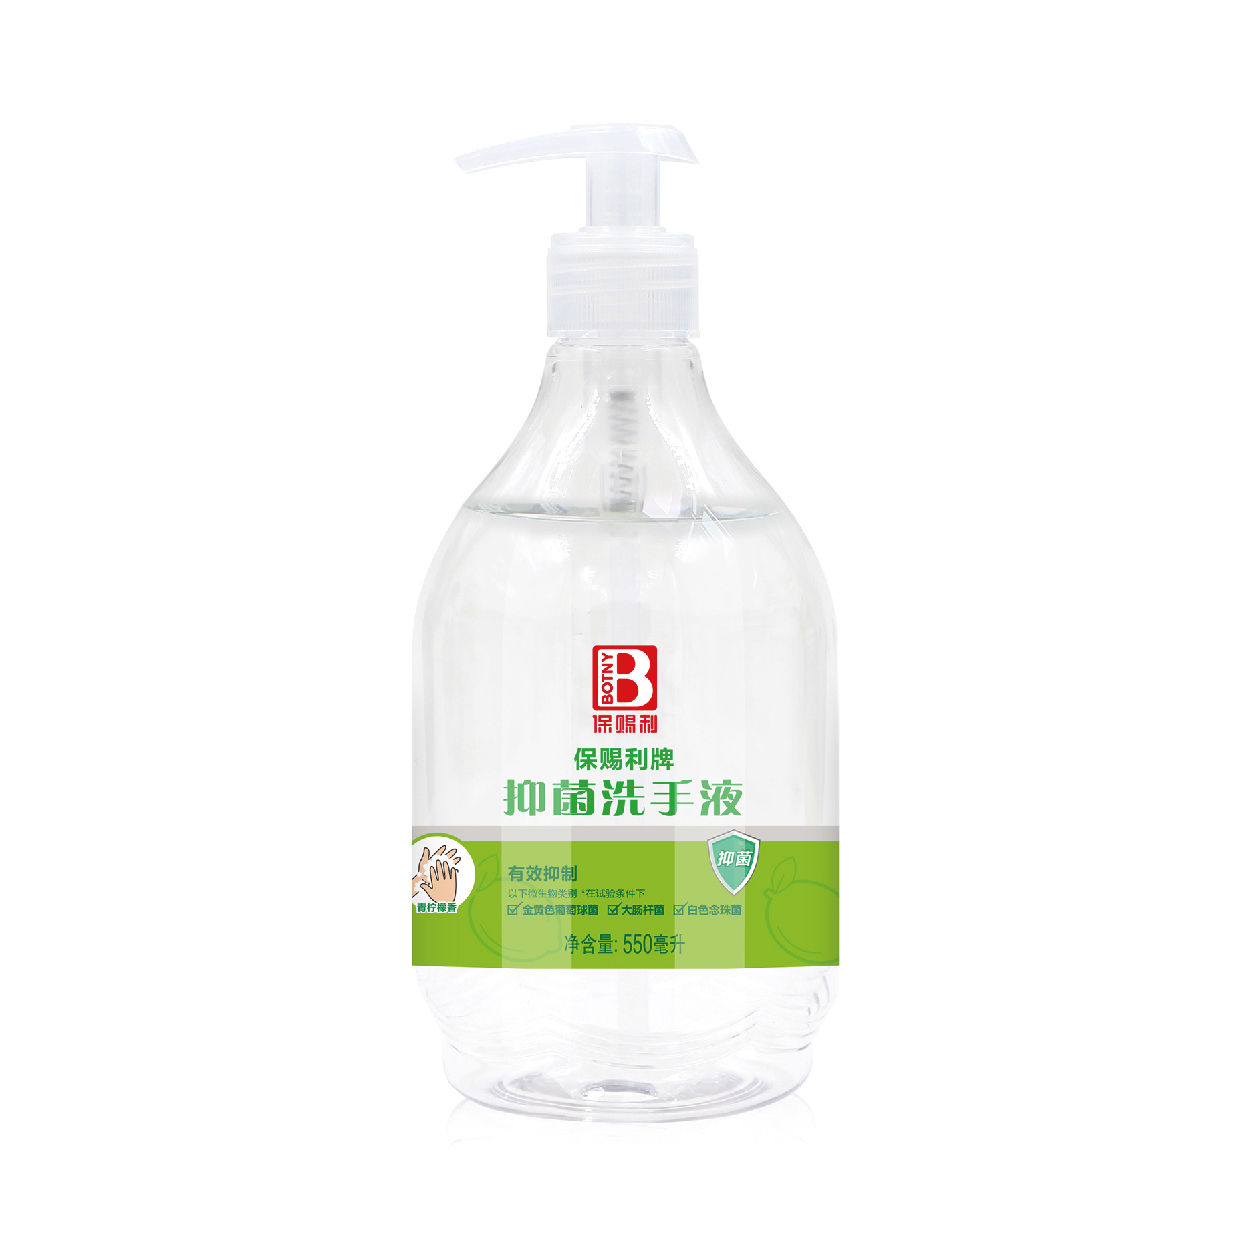 BOTNY Antibacterial Hand Soap 550ML